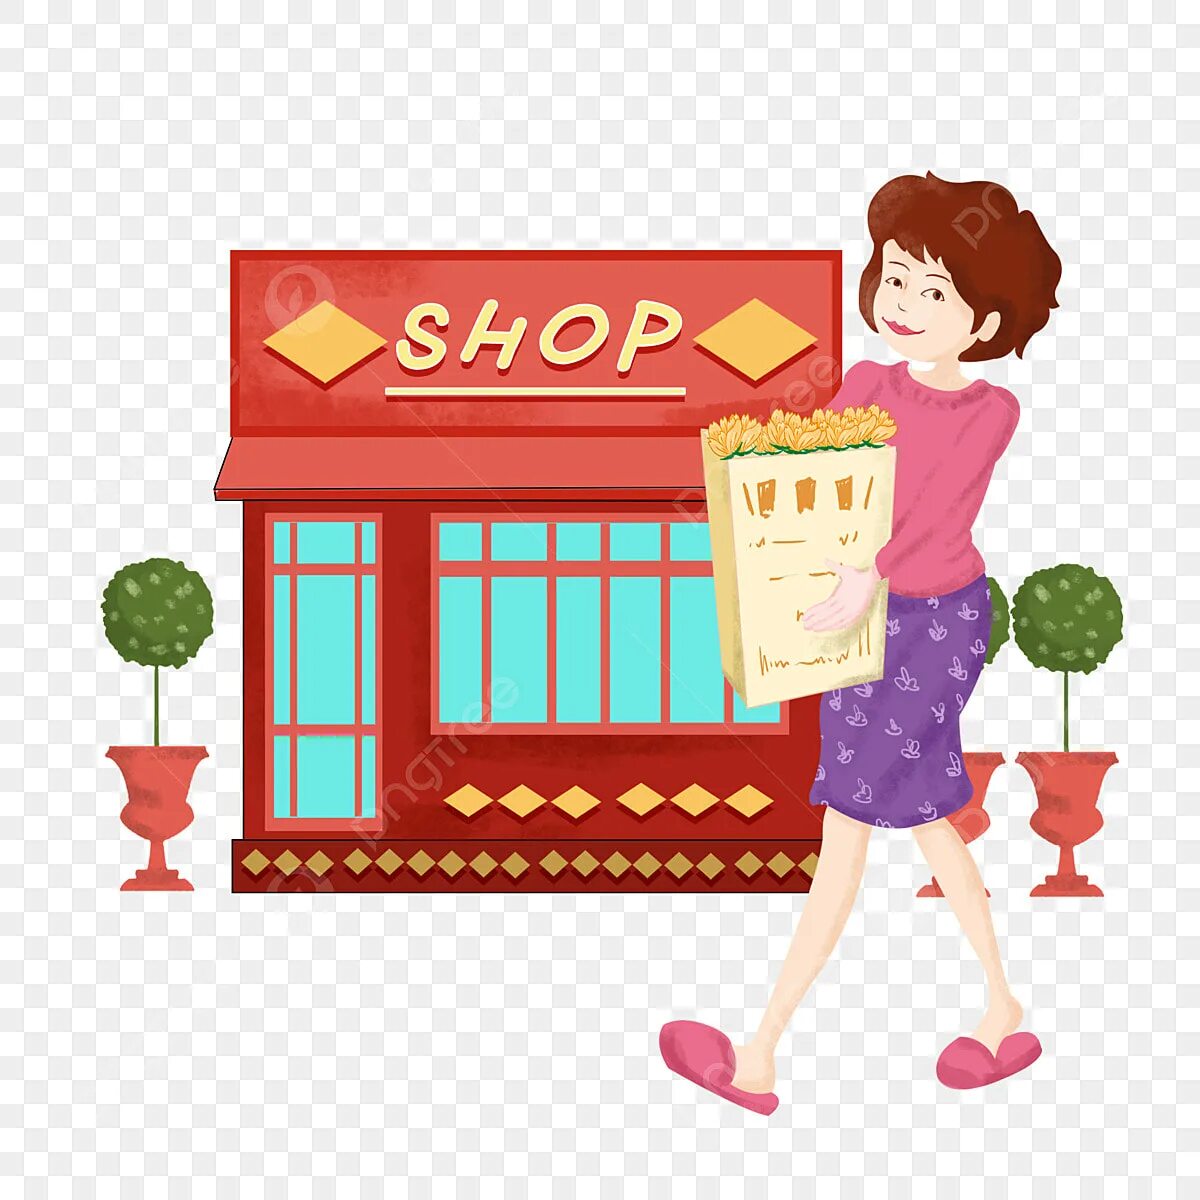 L go shopping. Магазин иллюстрация. Магазин рисунок. Нарисованный shop. Shop иллюстрация.